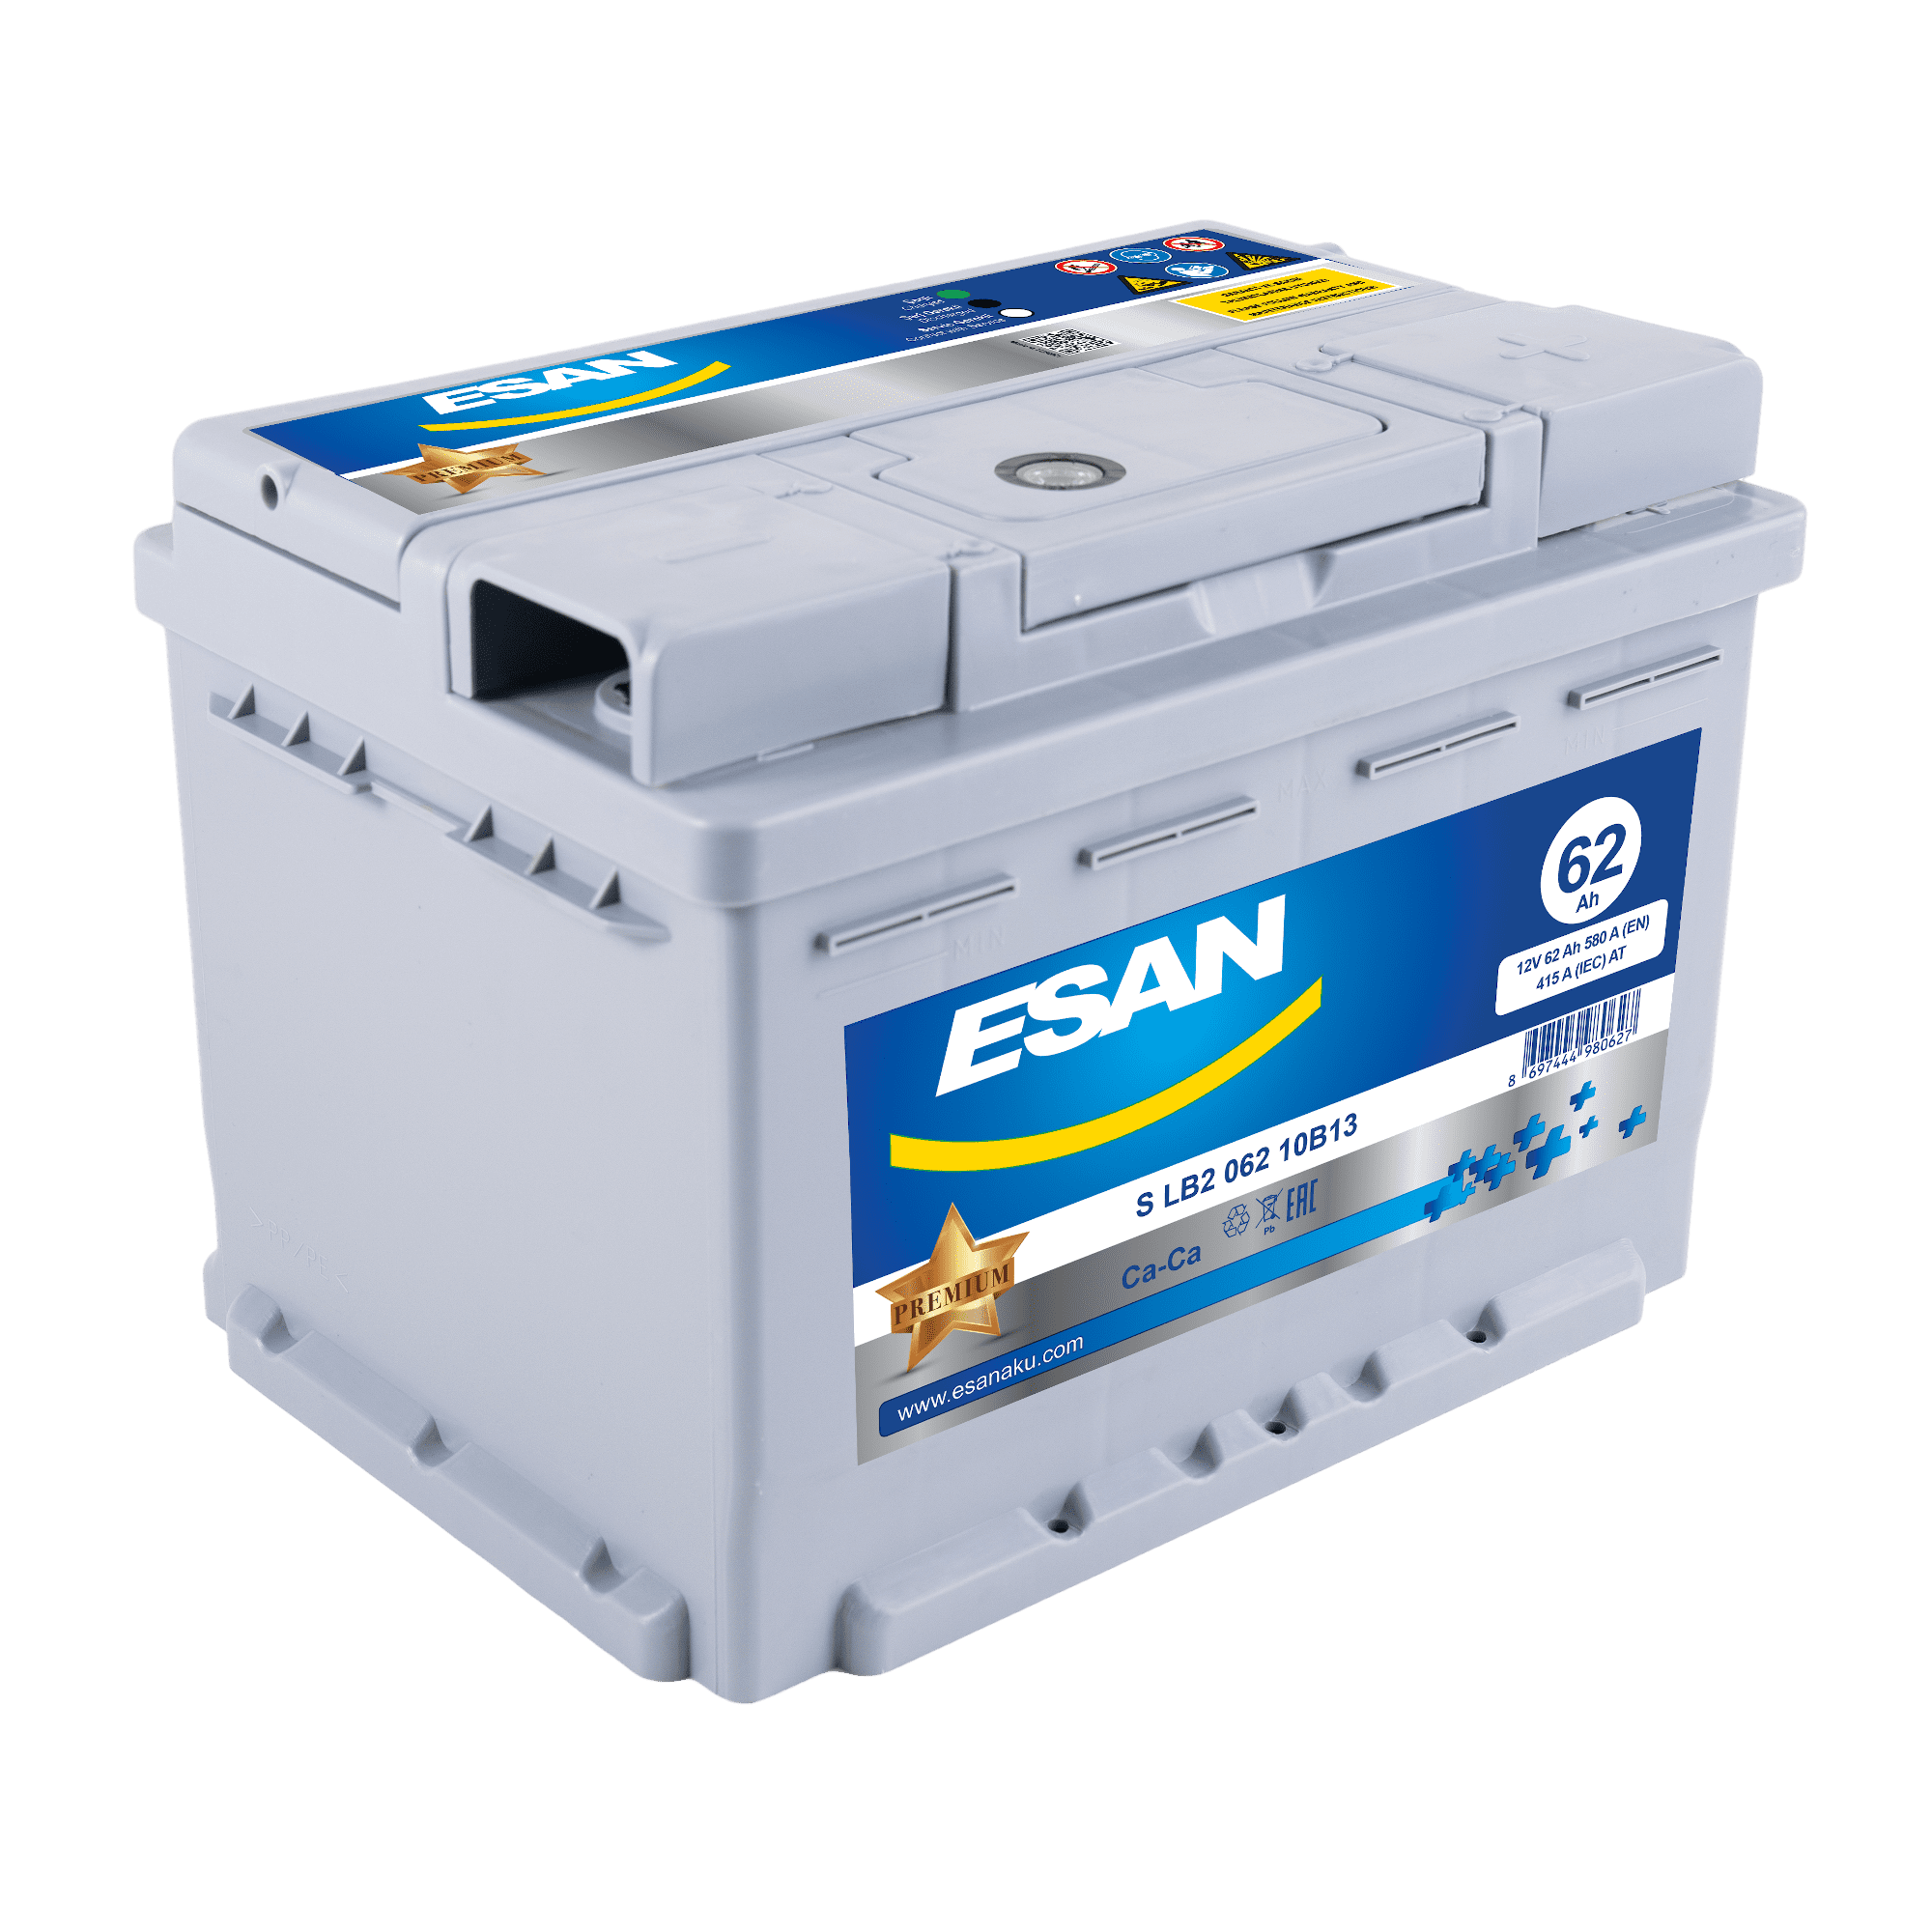 Автомобильная аккумуляторная батарея ESAN SMF S LB2 062 10B13, 62 Ач, LB2 DIN, 0/1